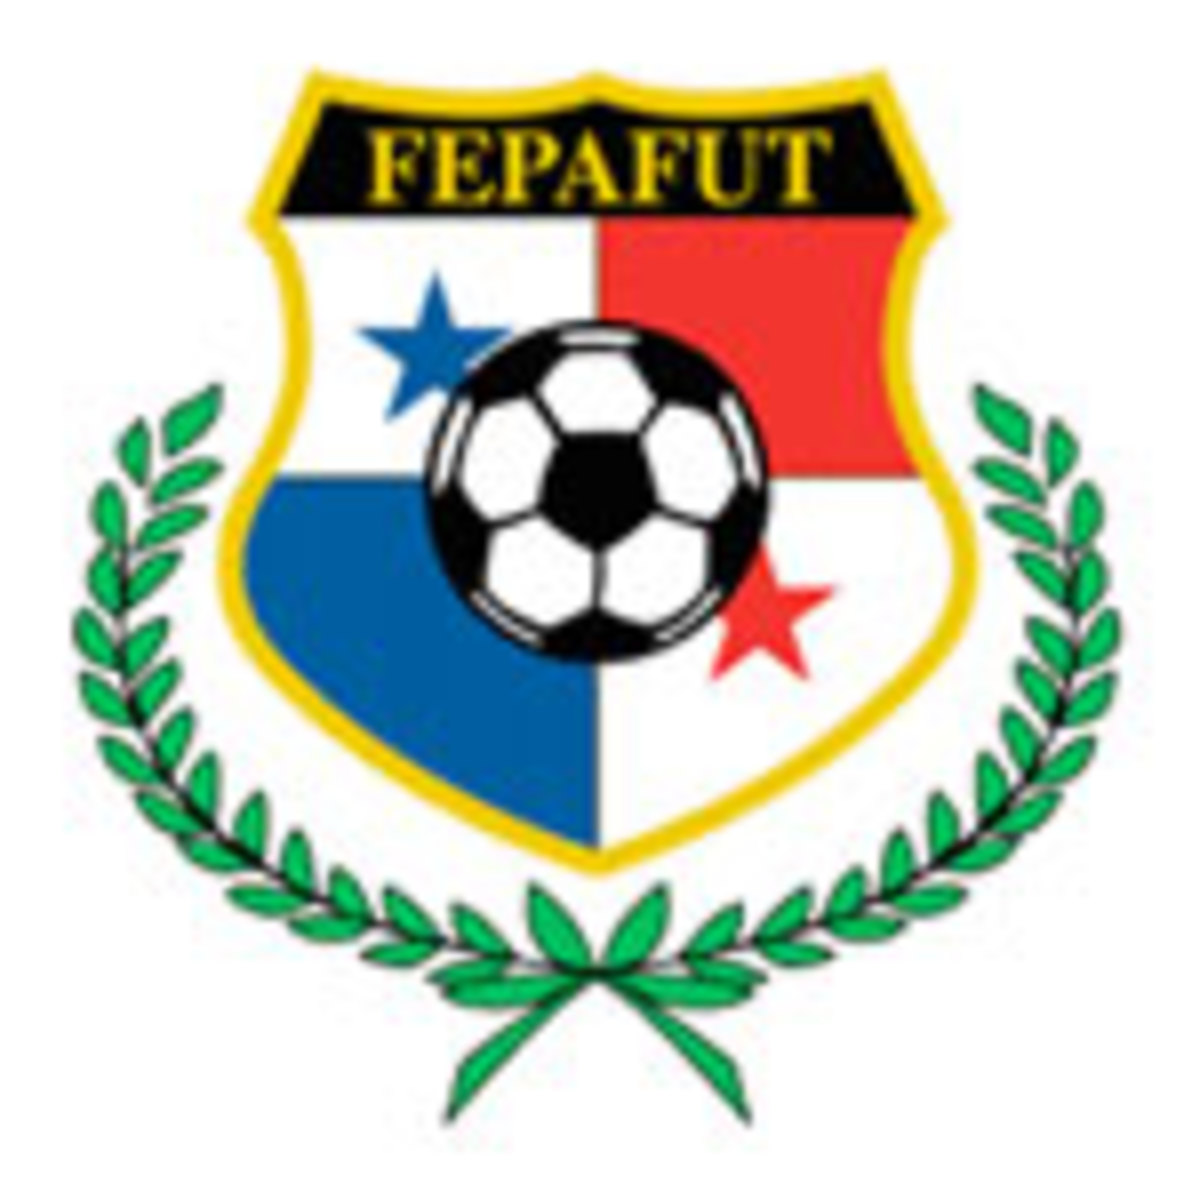 panama-world-cup-logo.jpg